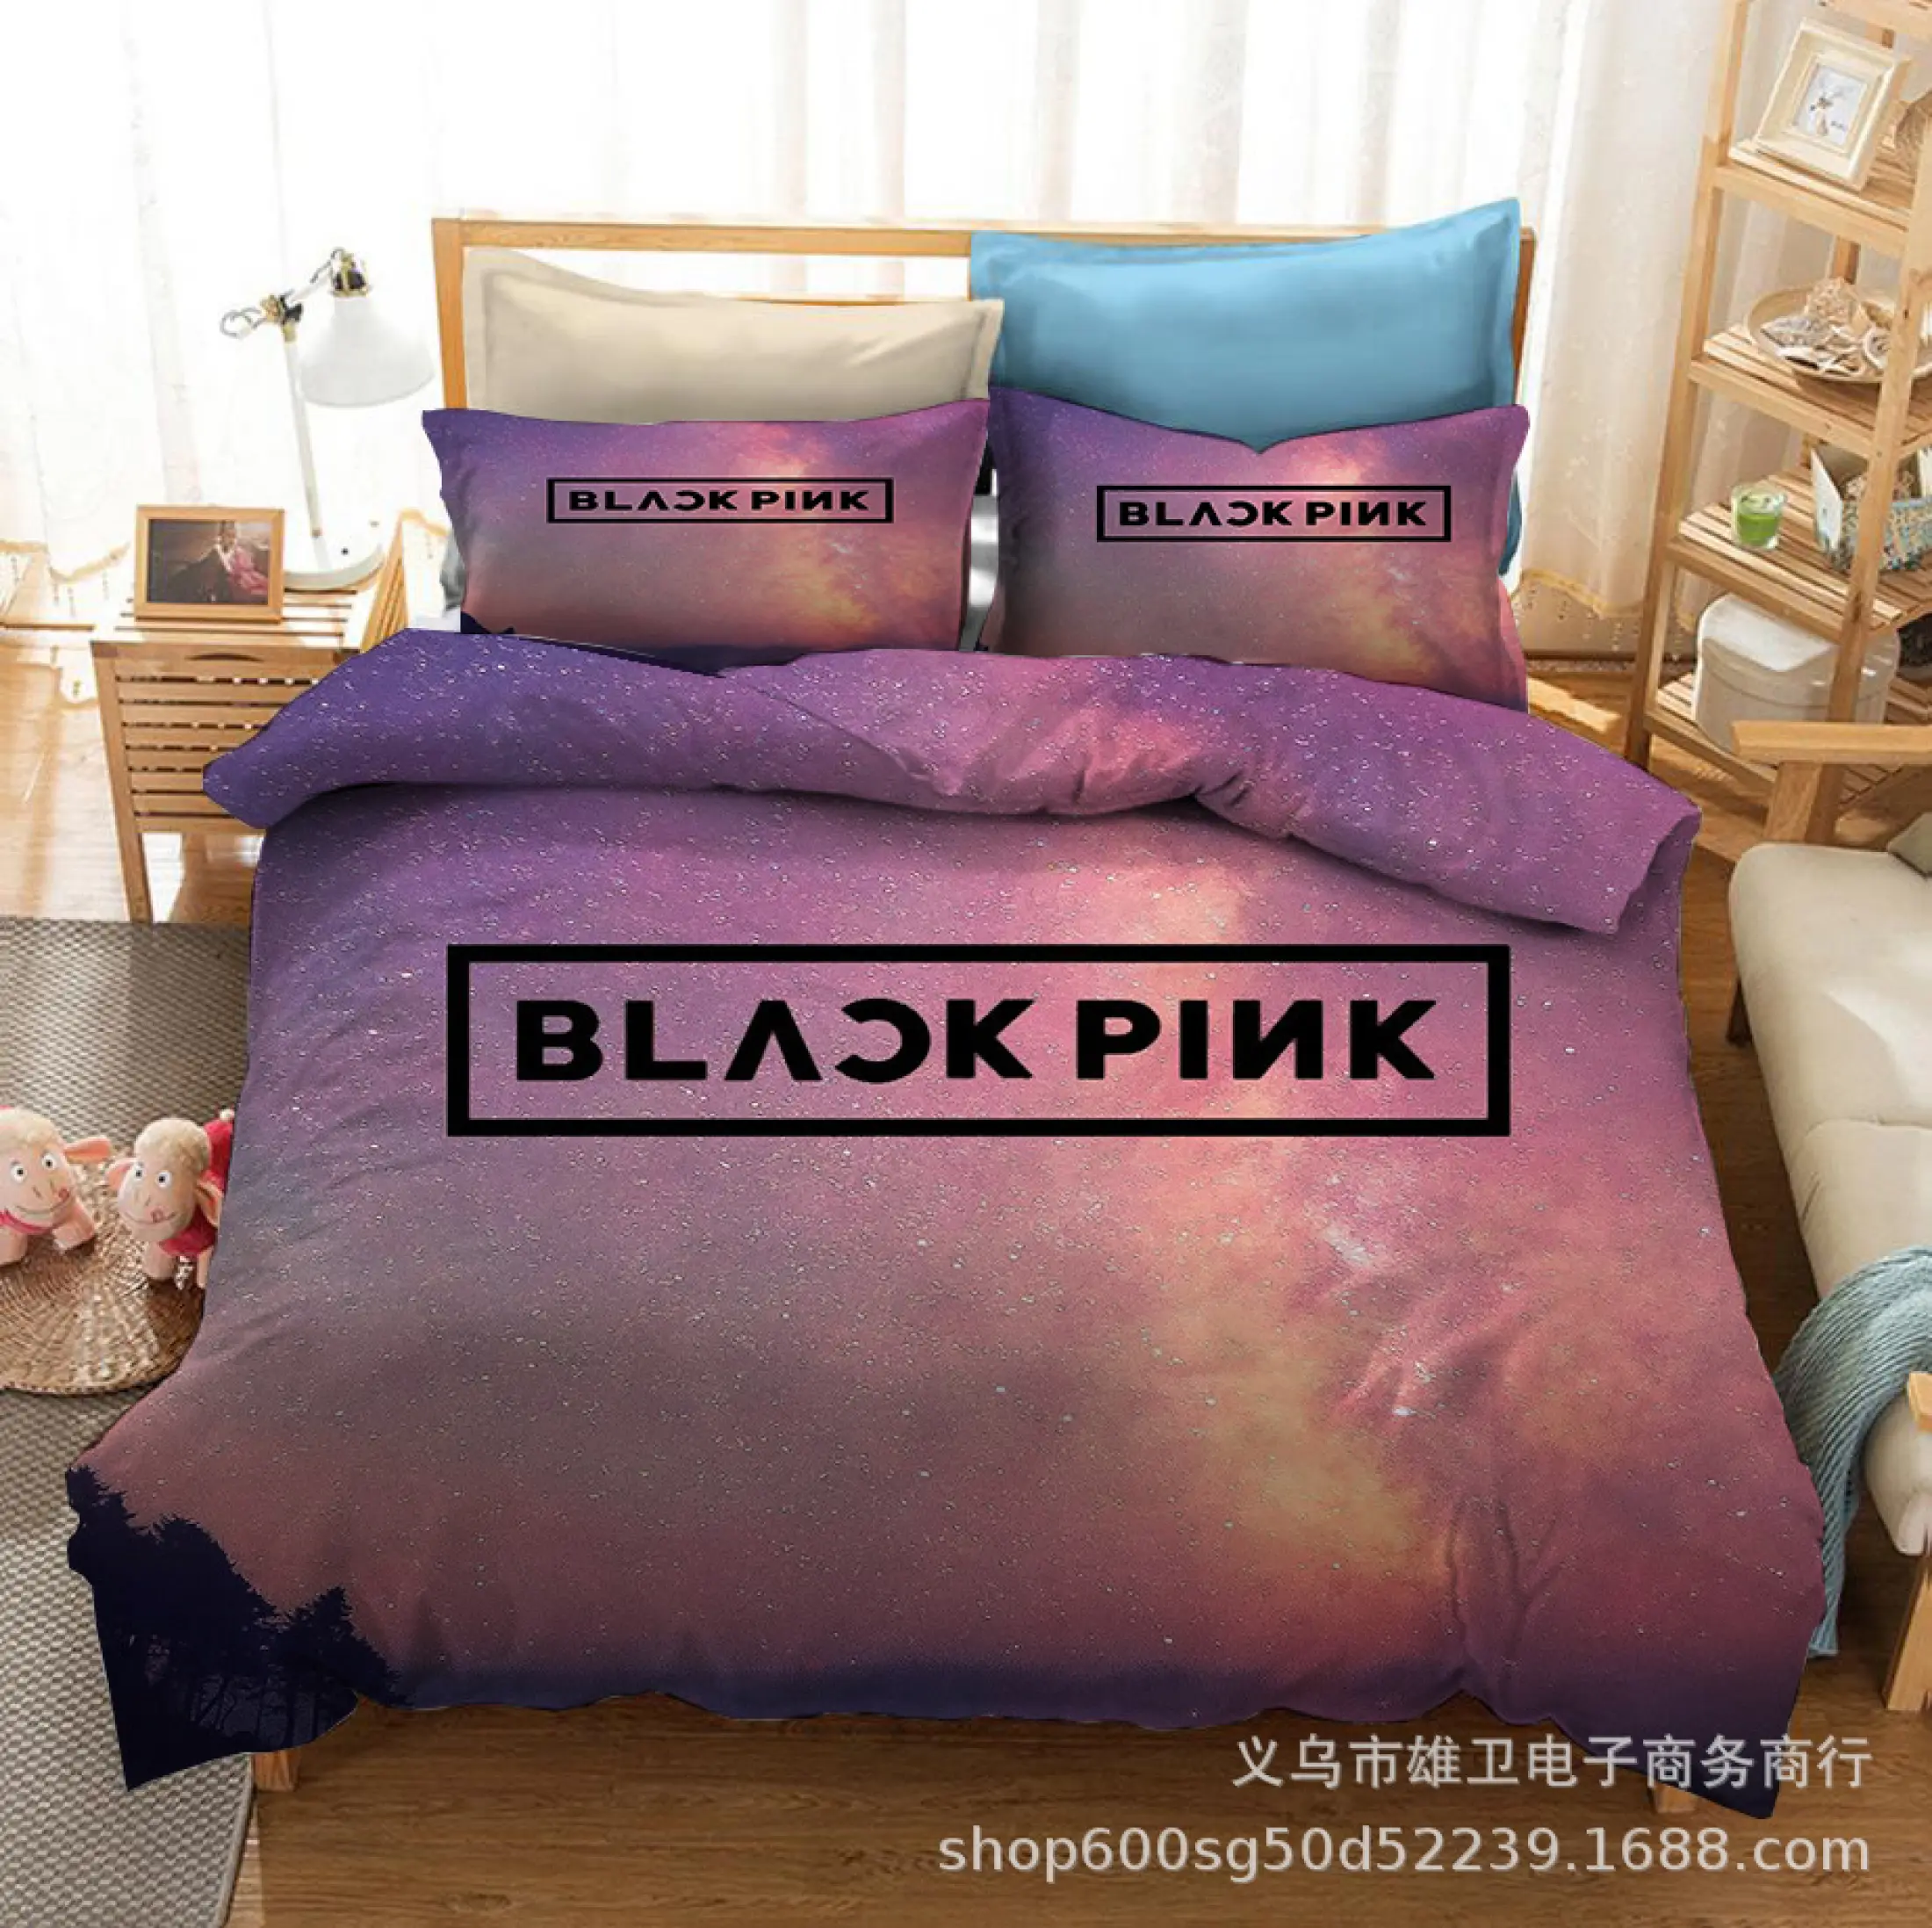 korean singer band blackpink custom home textile decor new gifts girl bedclothes bed linens bedding set cover set lazada singapore